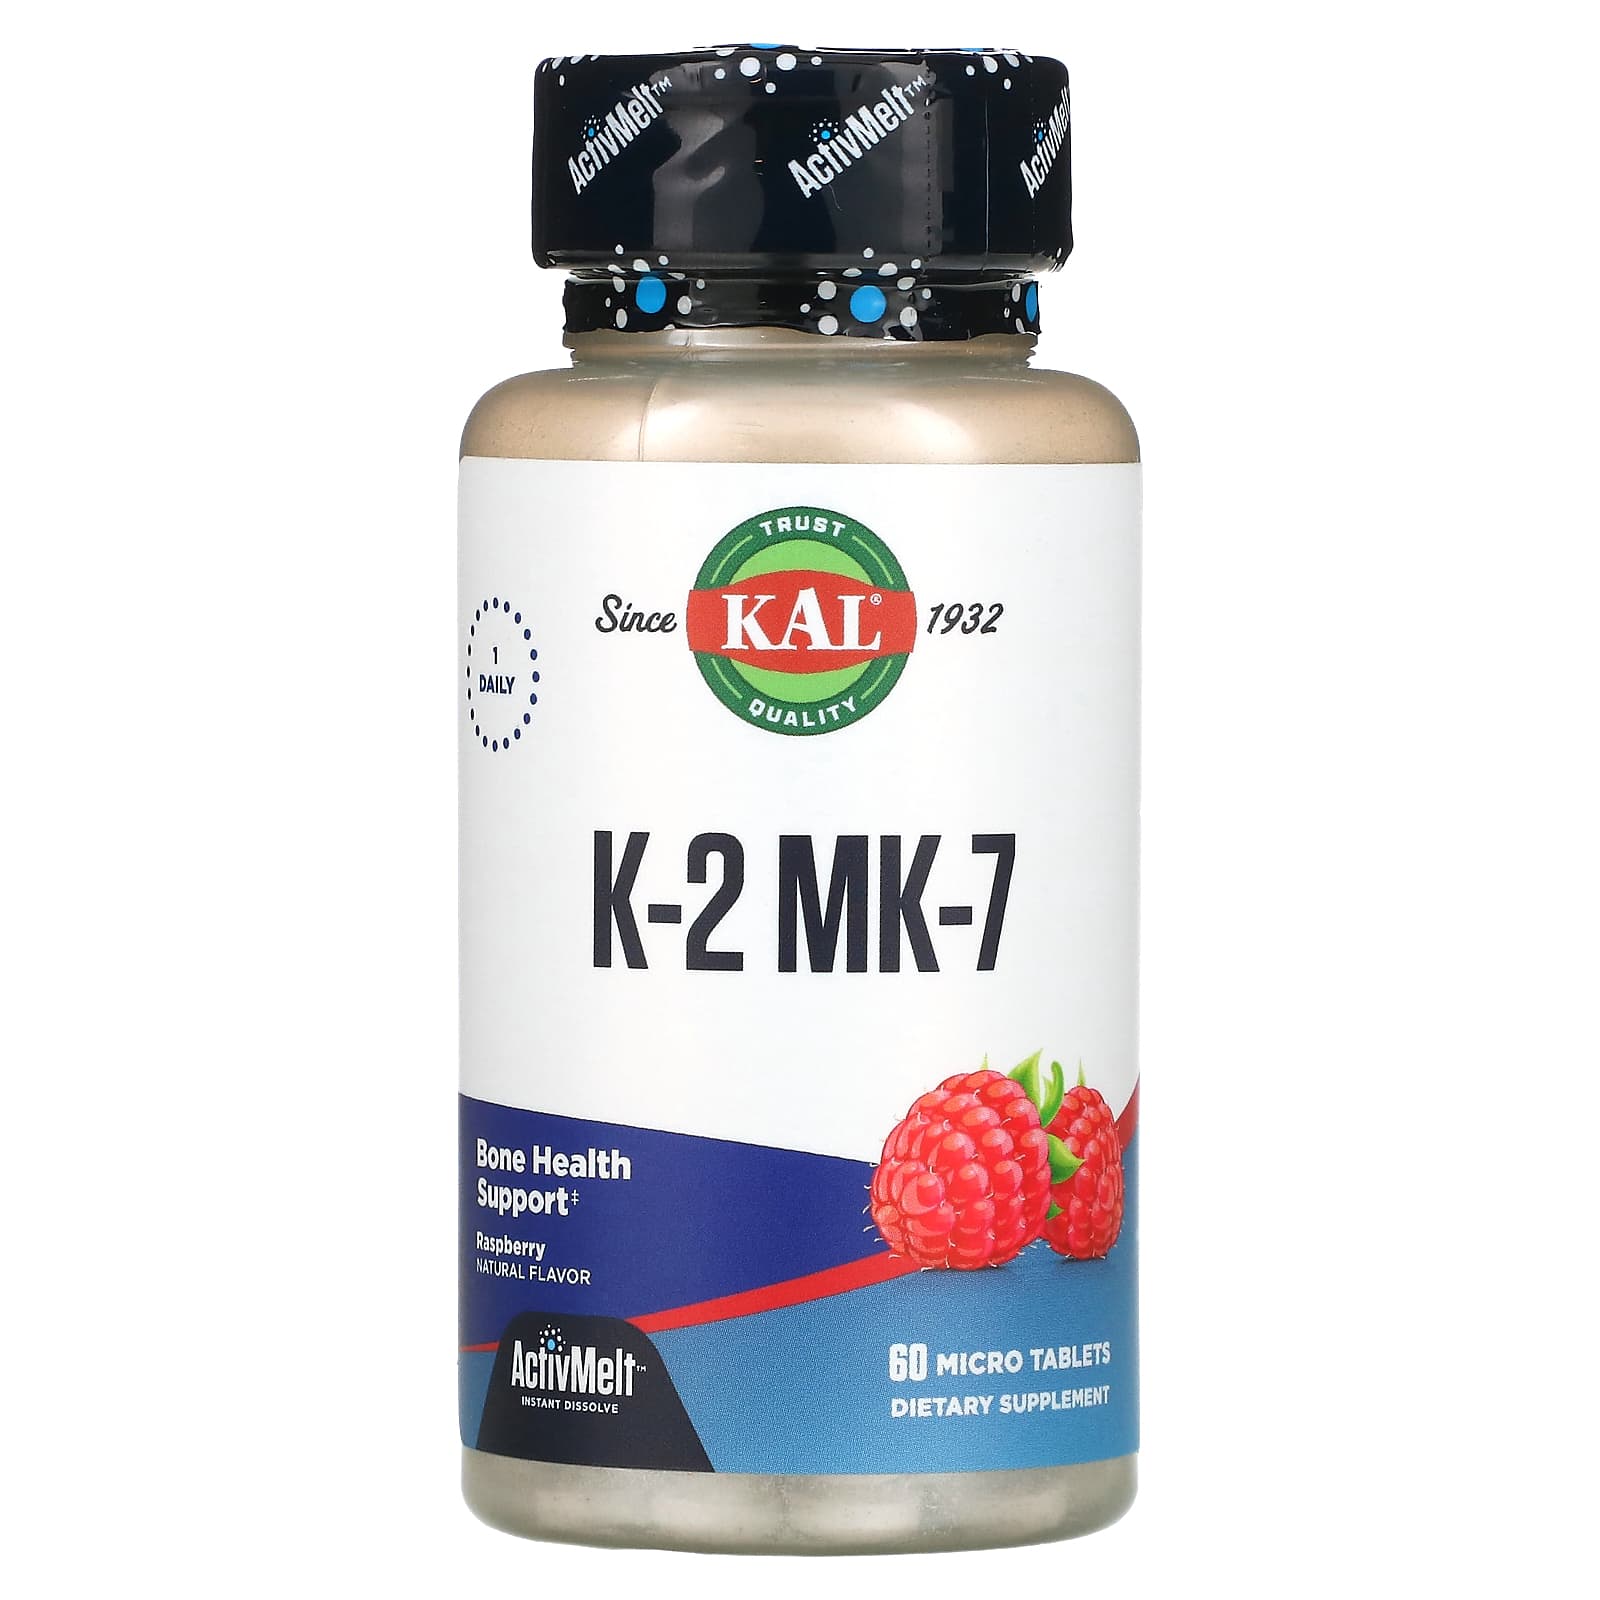 Kal K-2 MK-7, Bone Support, Raspberry, 60 Micro Tablets